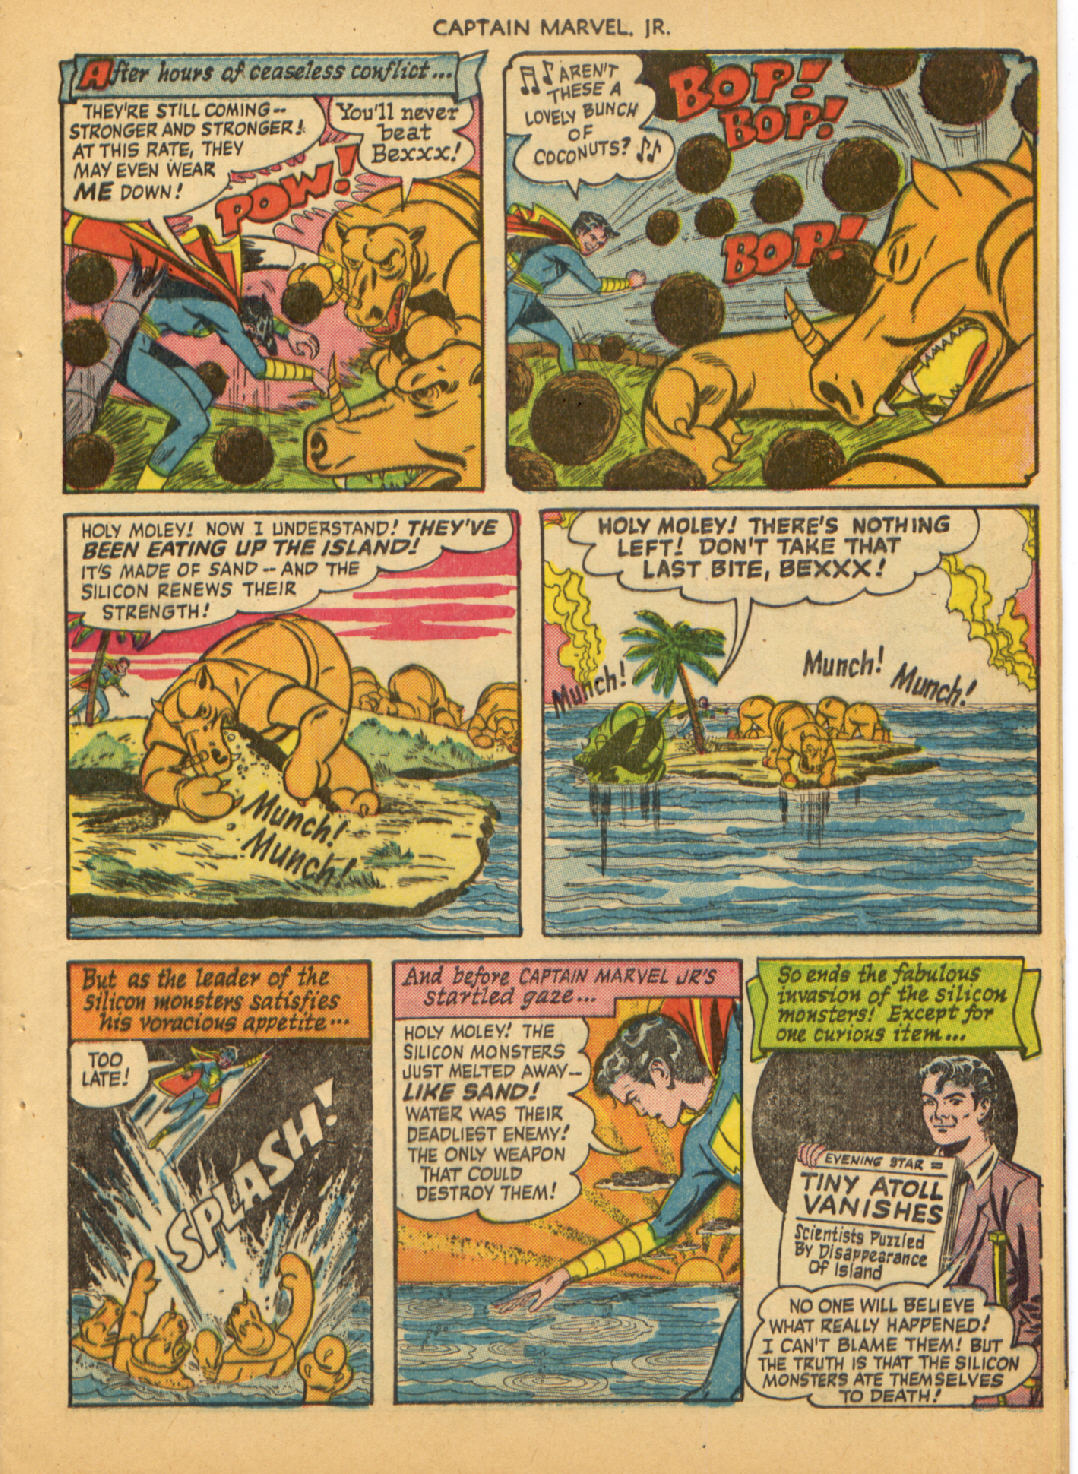 Read online Captain Marvel, Jr. comic -  Issue #92 - 13